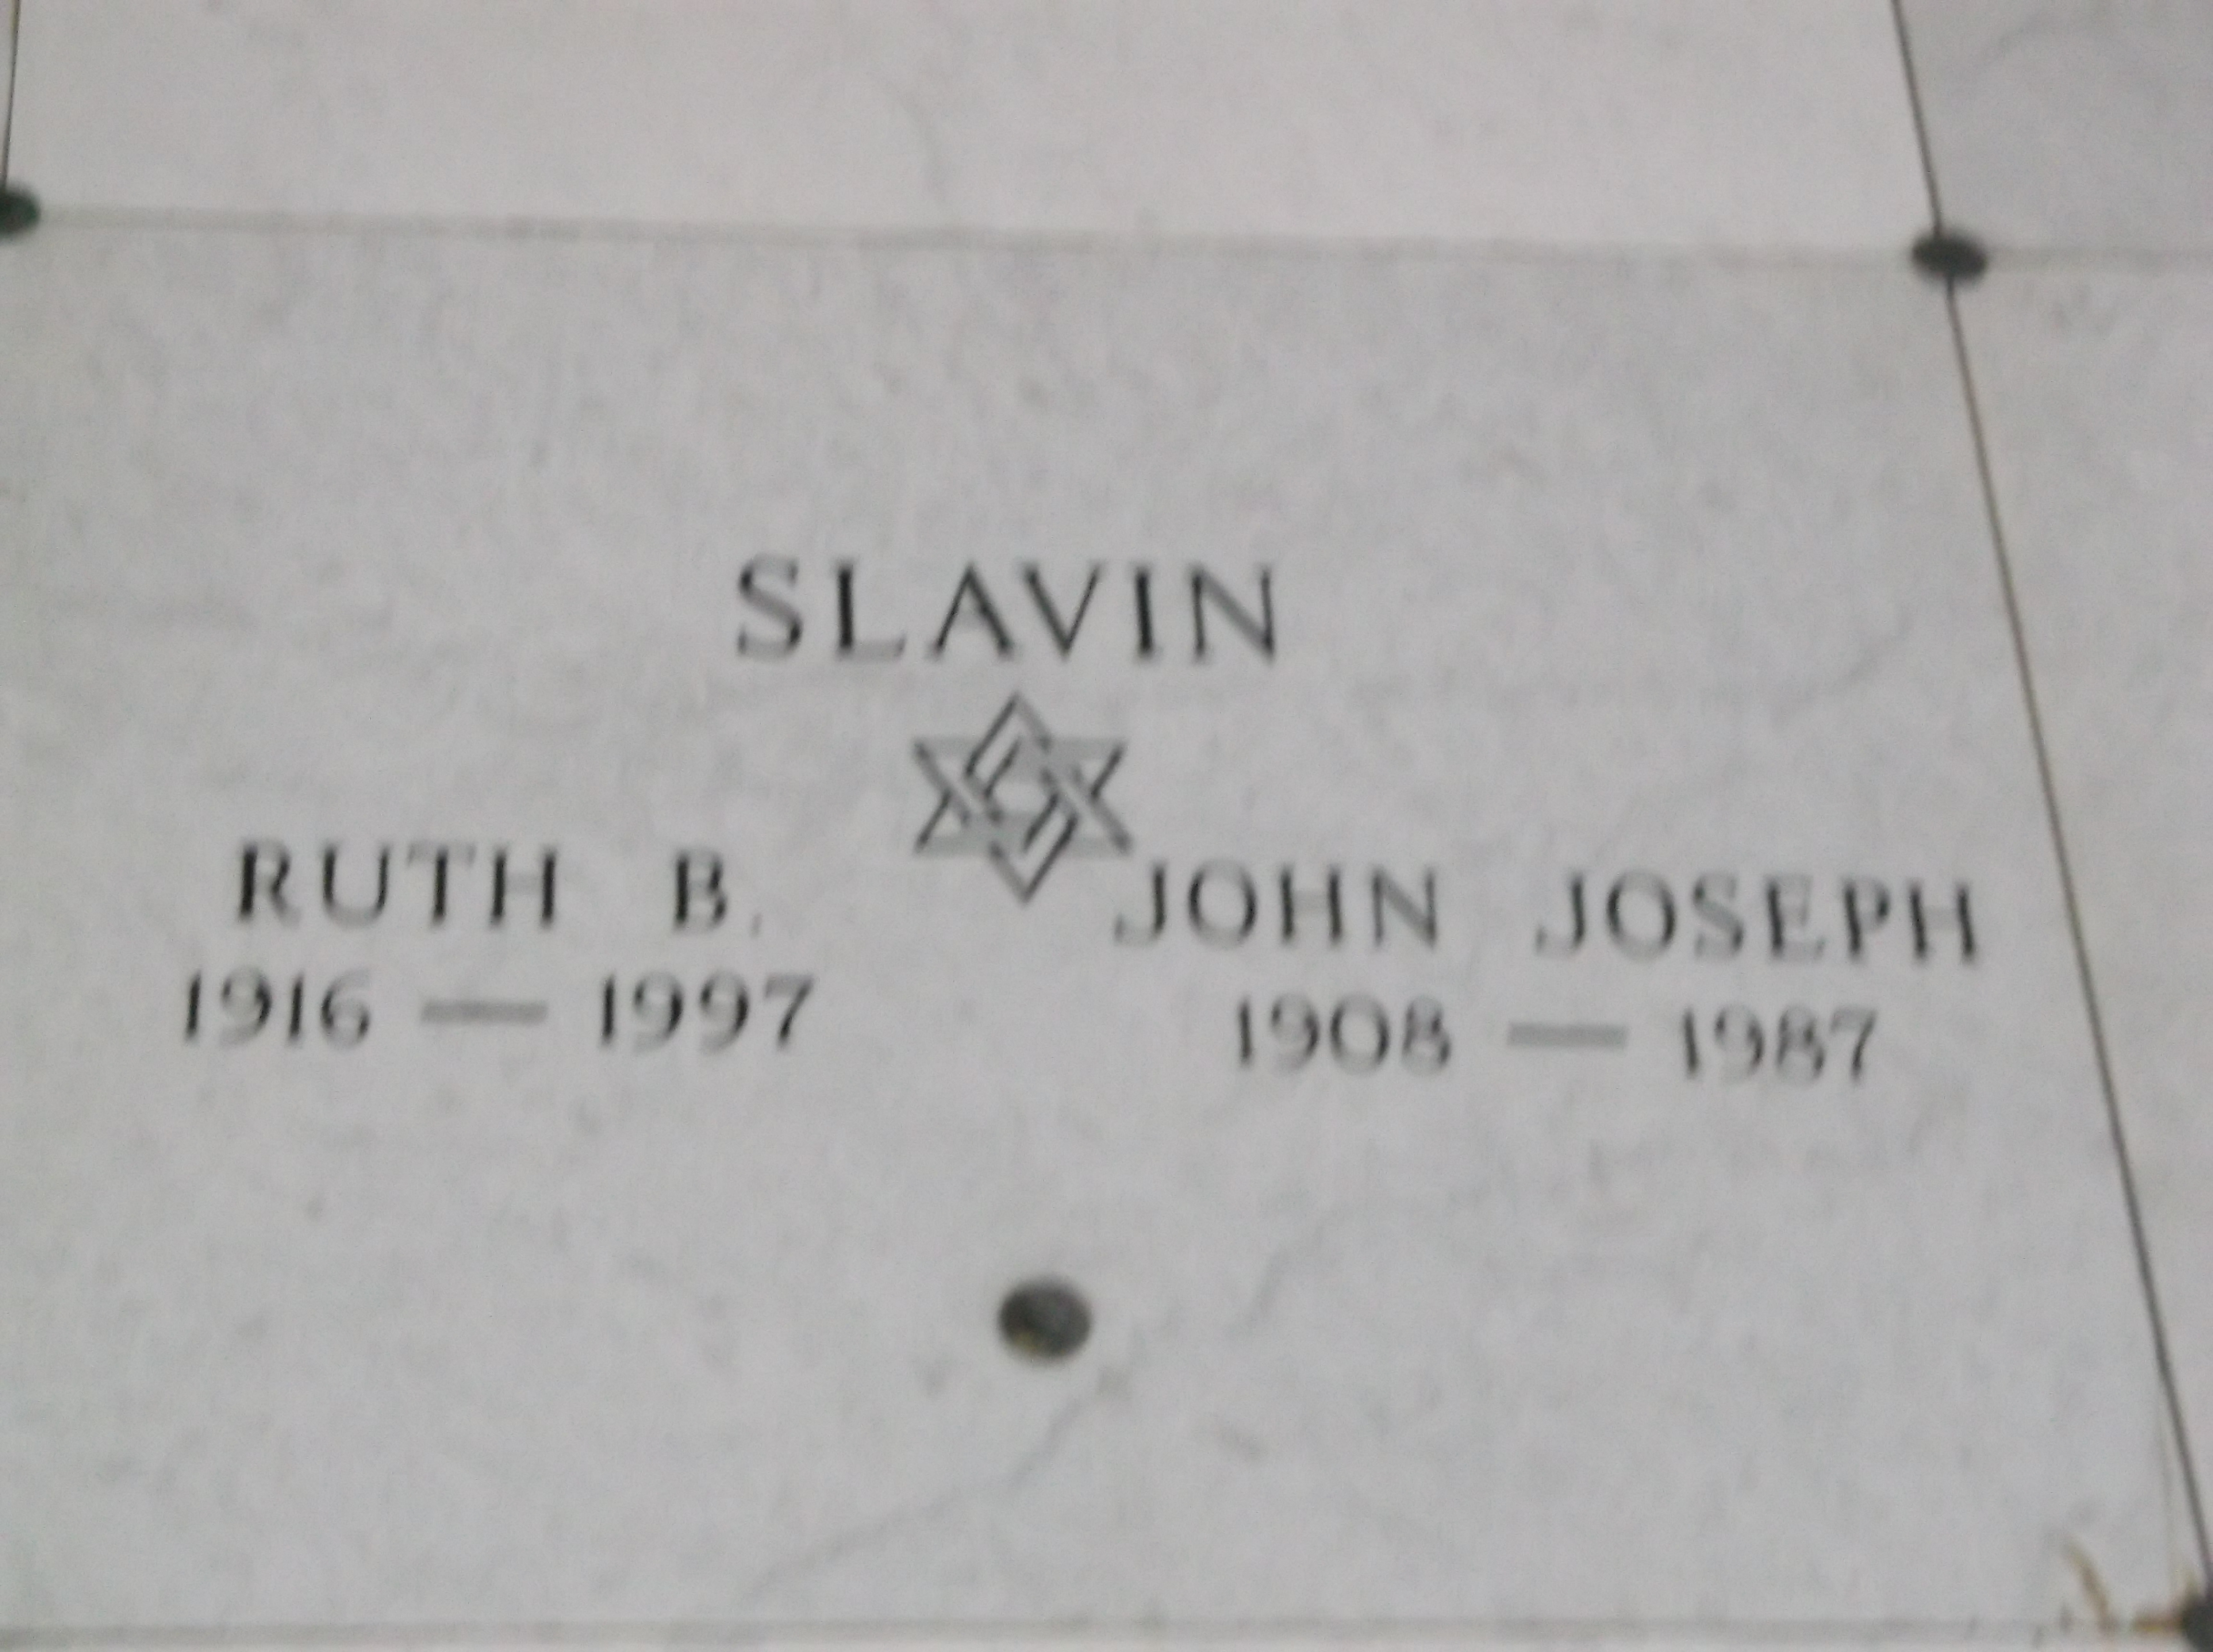 John Joseph Slavin